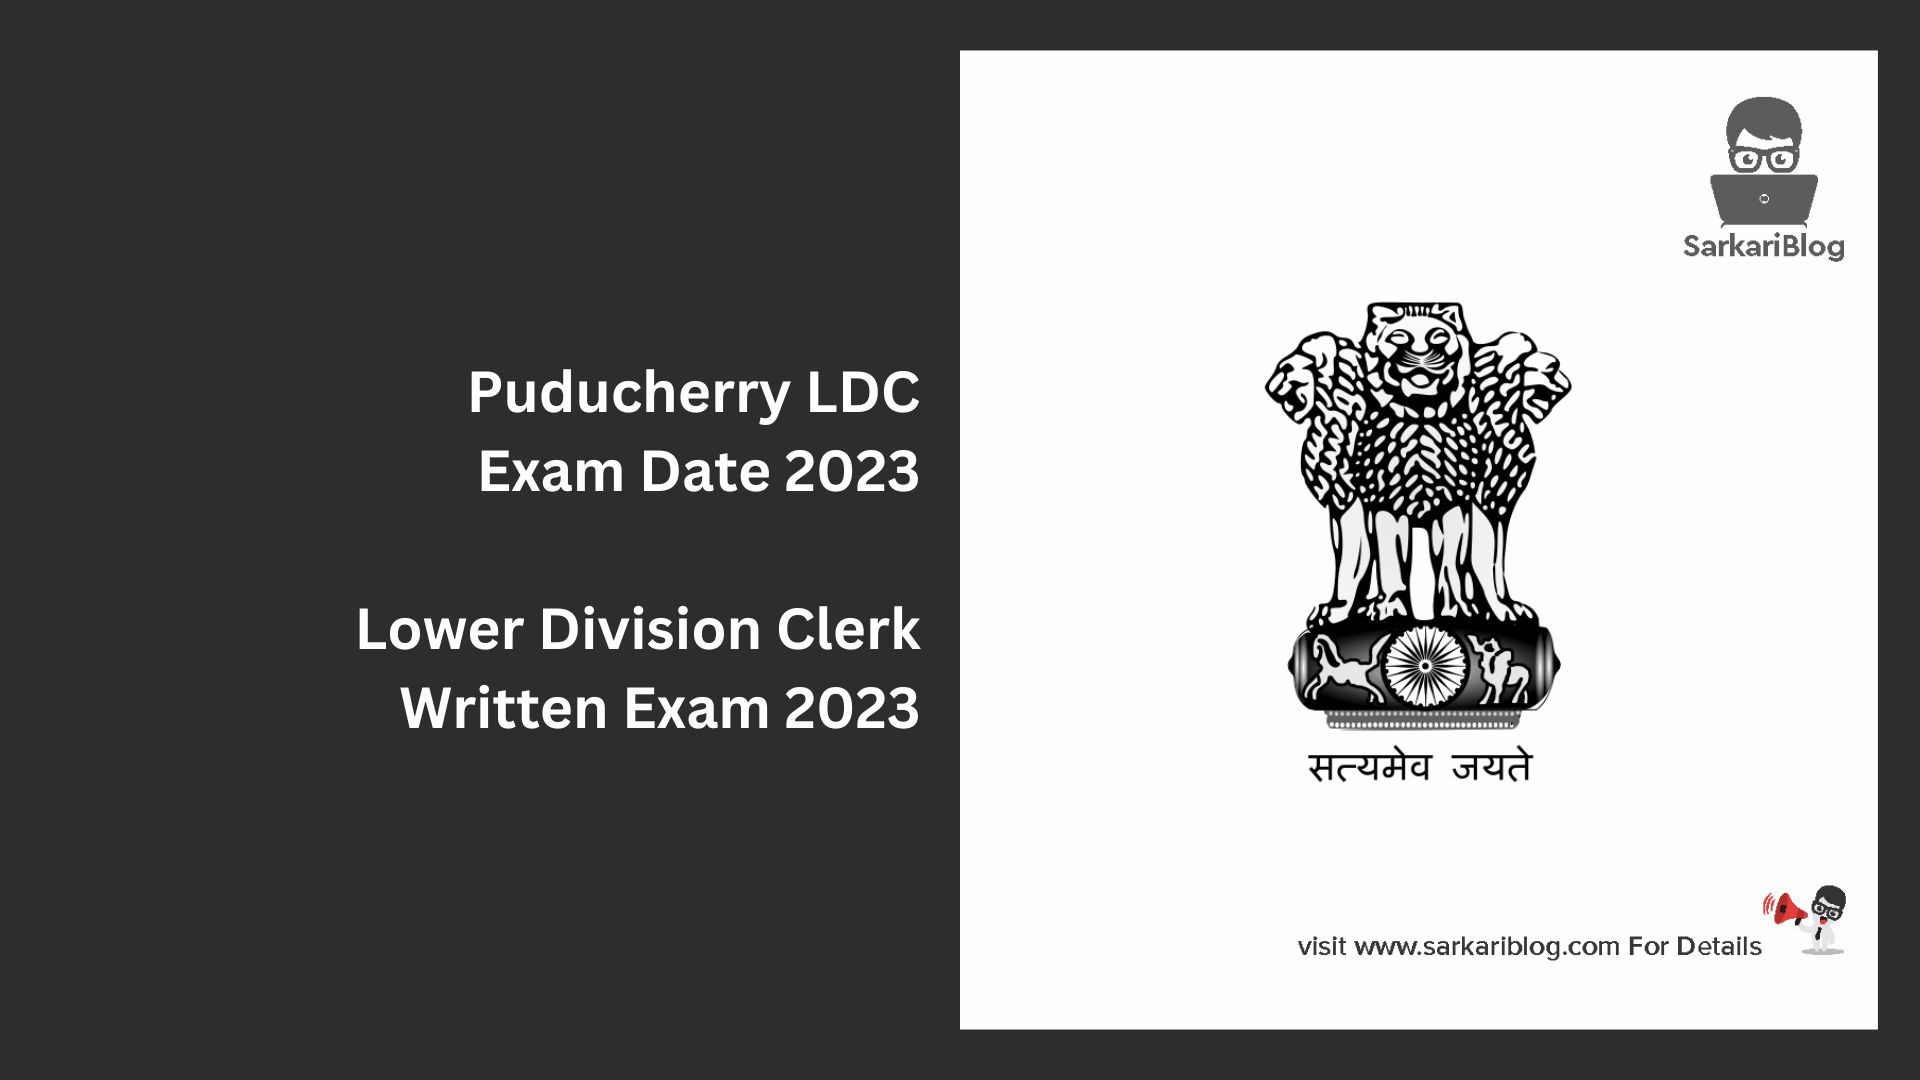 Puducherry LDC Exam Date 2023